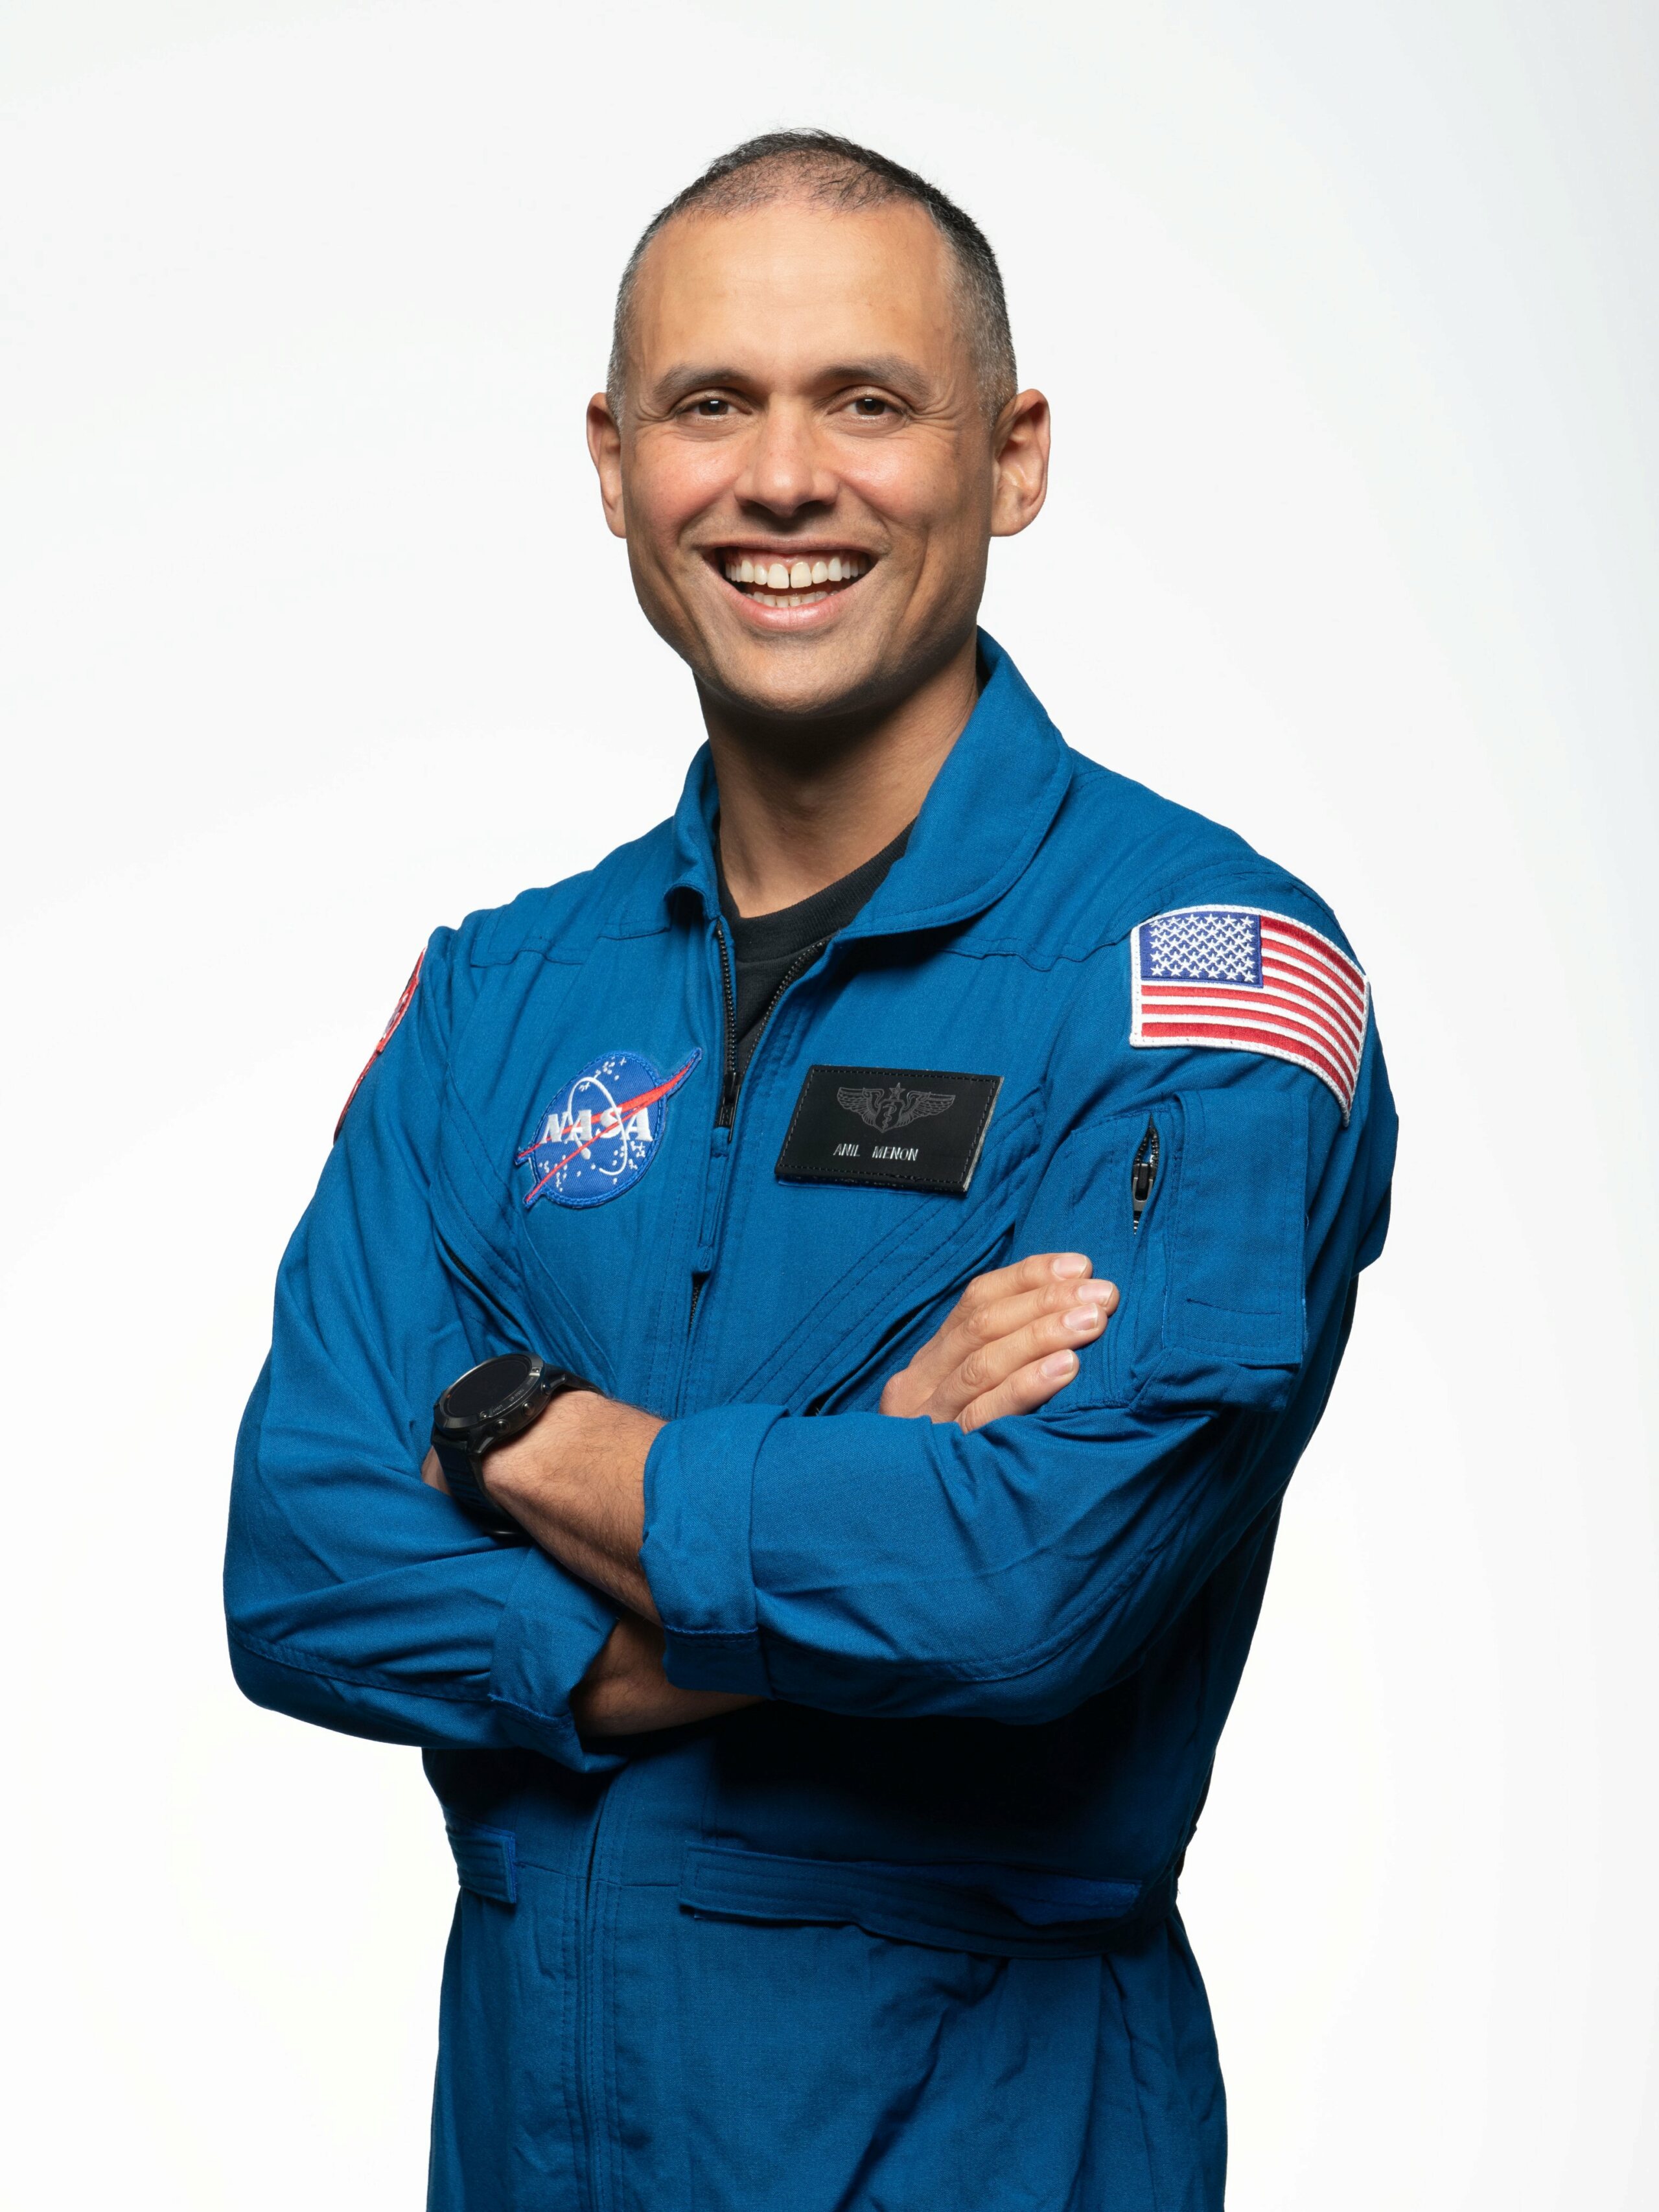 Classe 2021 des candidats astronautes de la NASA 1010